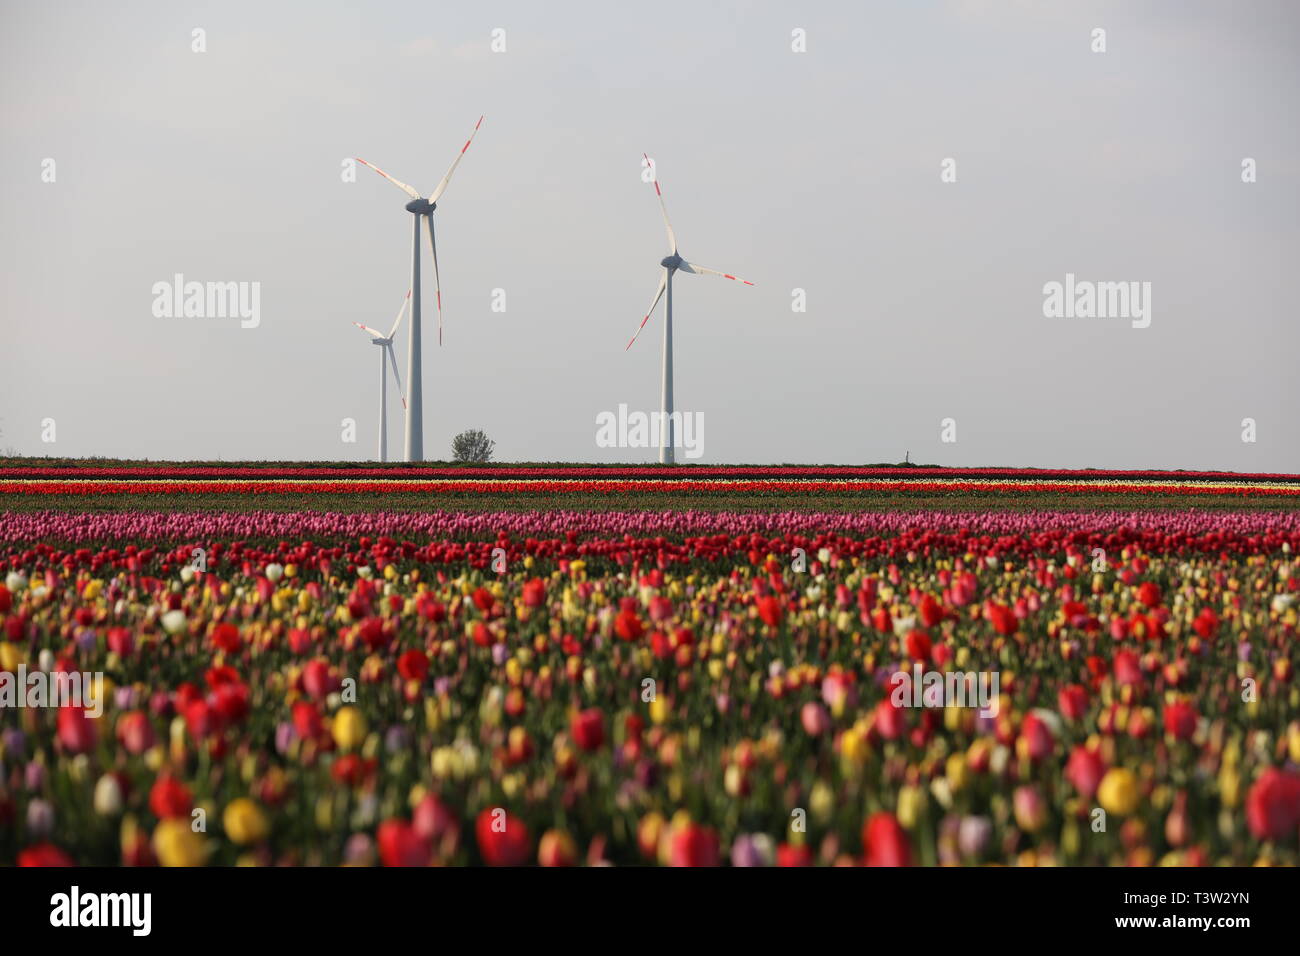 Windkraftanlage im Tulpenfeld Stock Photo